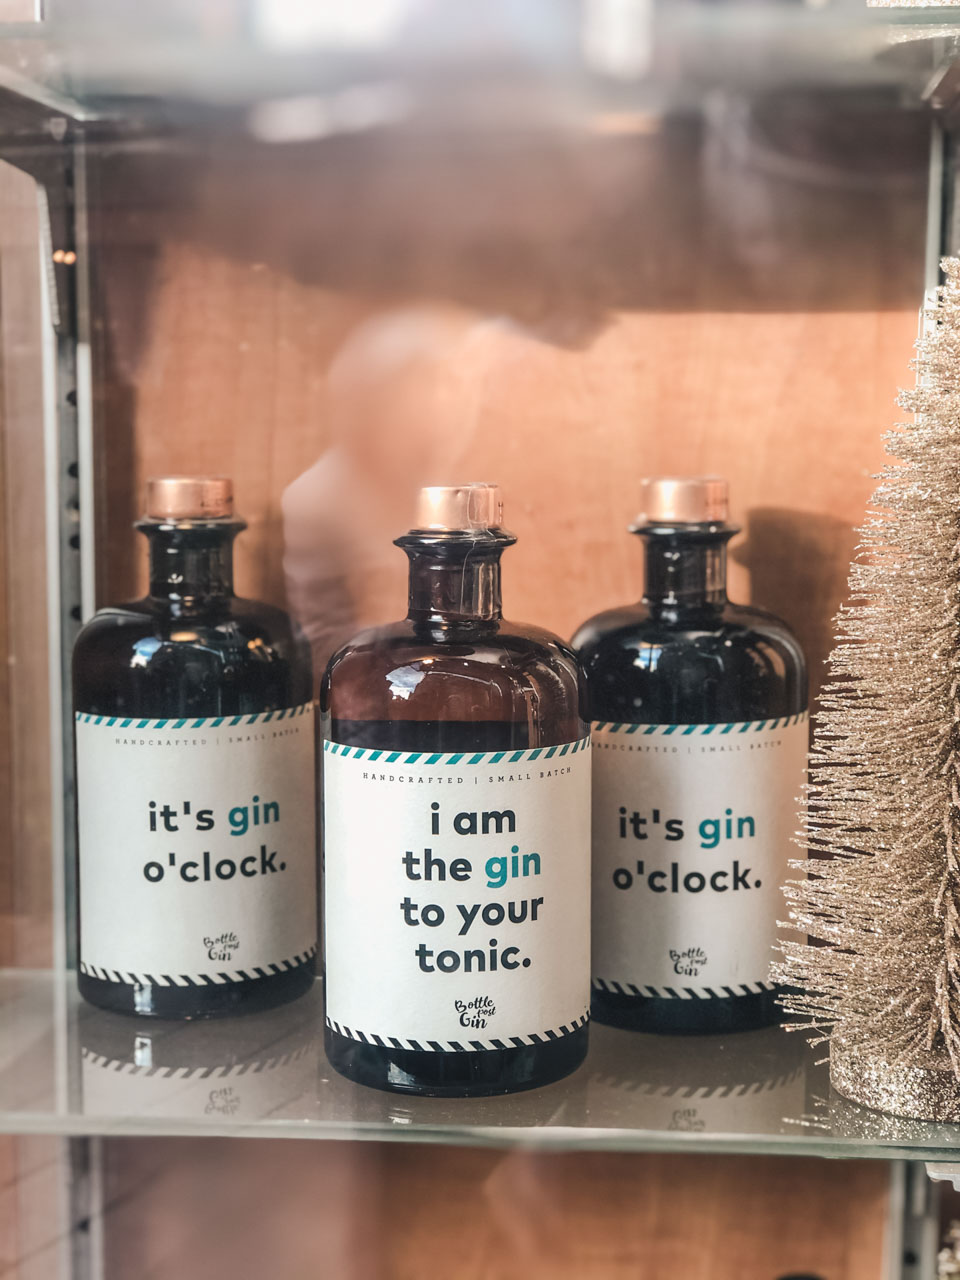 Bottles of gin on a glass shelf